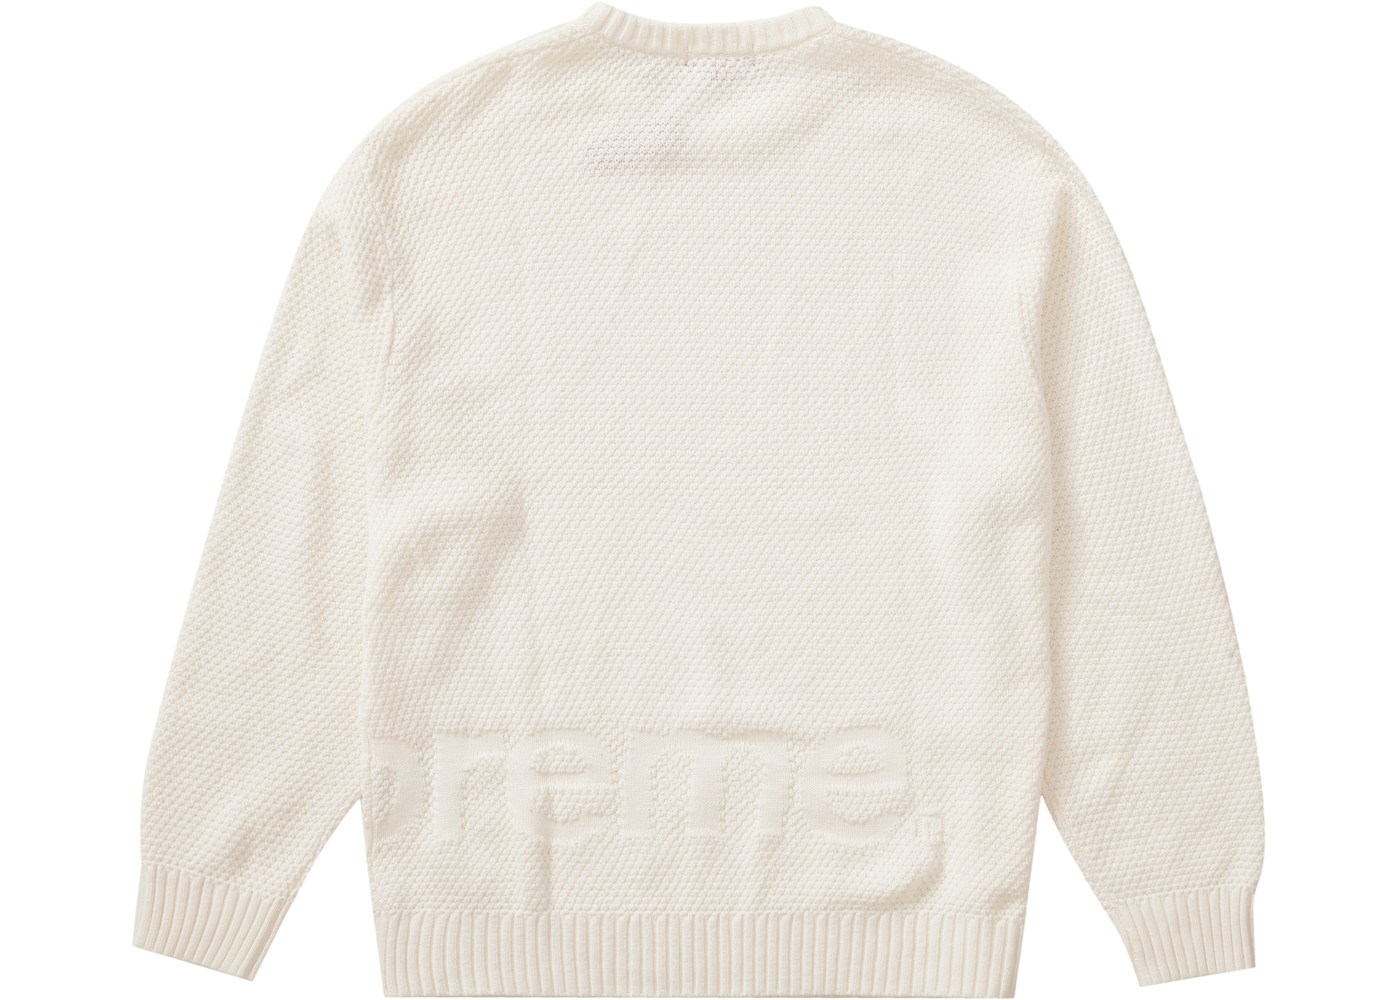 Supreme Textured Small Box Sweater White - FW20